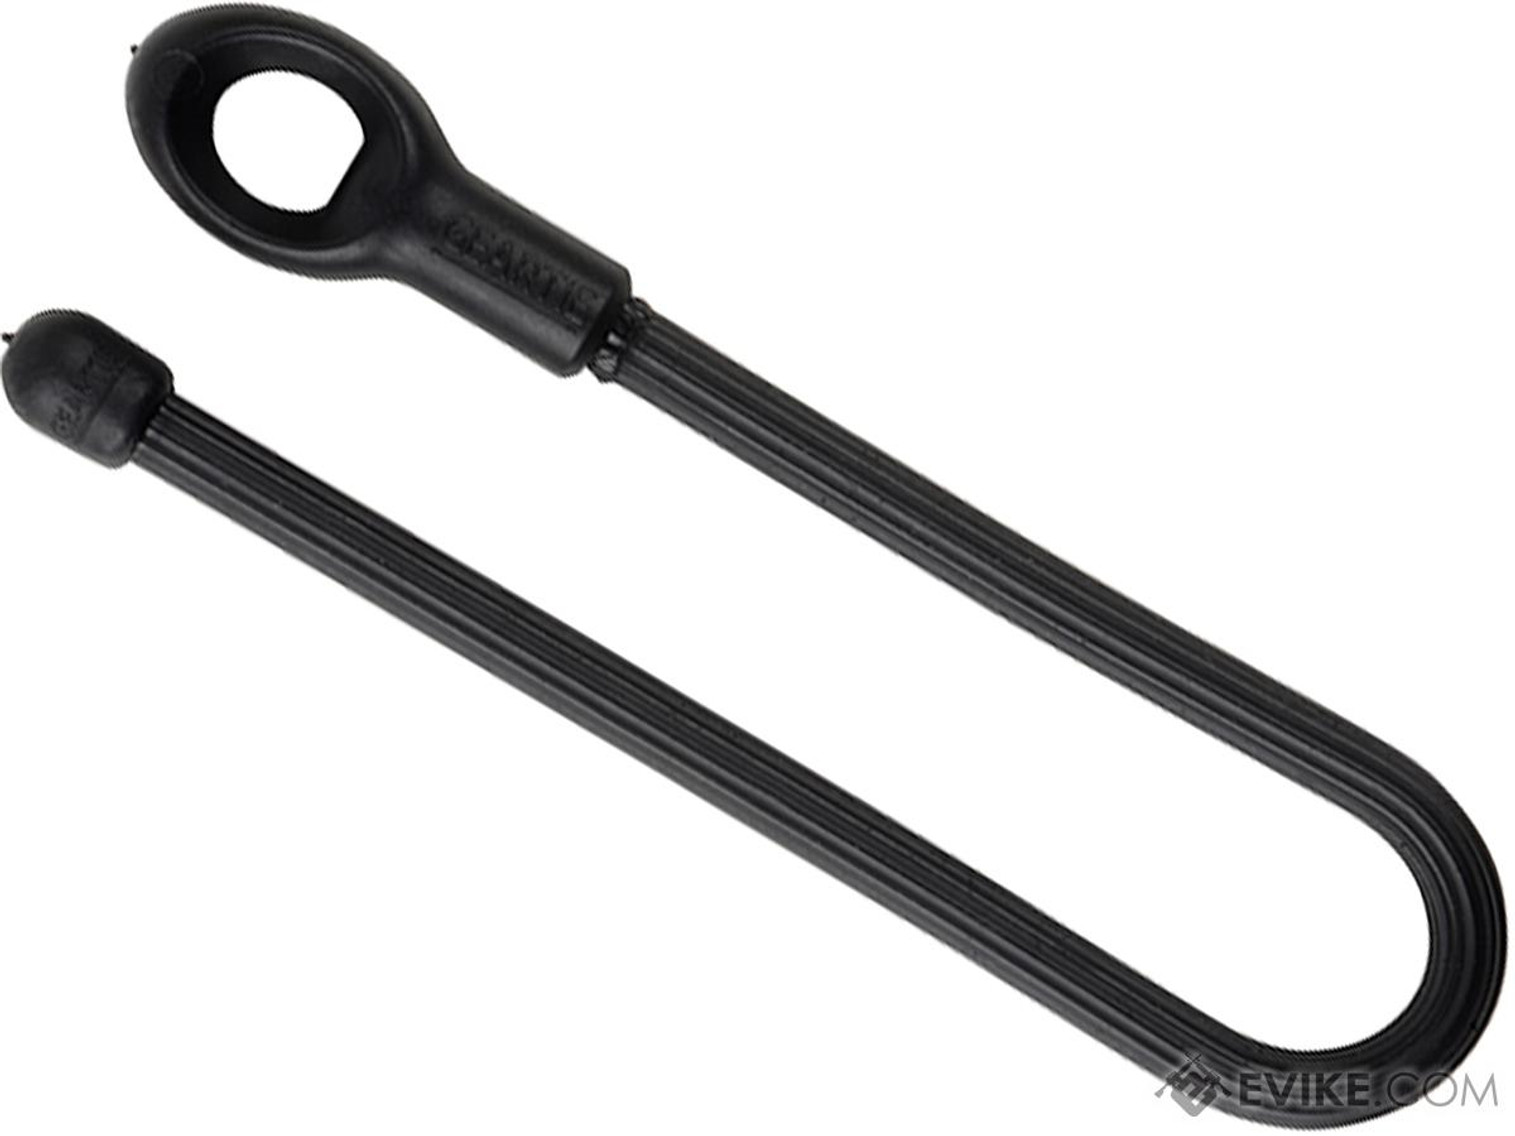 Nite Ize Gear Tie Loopable Twist Tie (Size: 12" 2 Pack / Black)